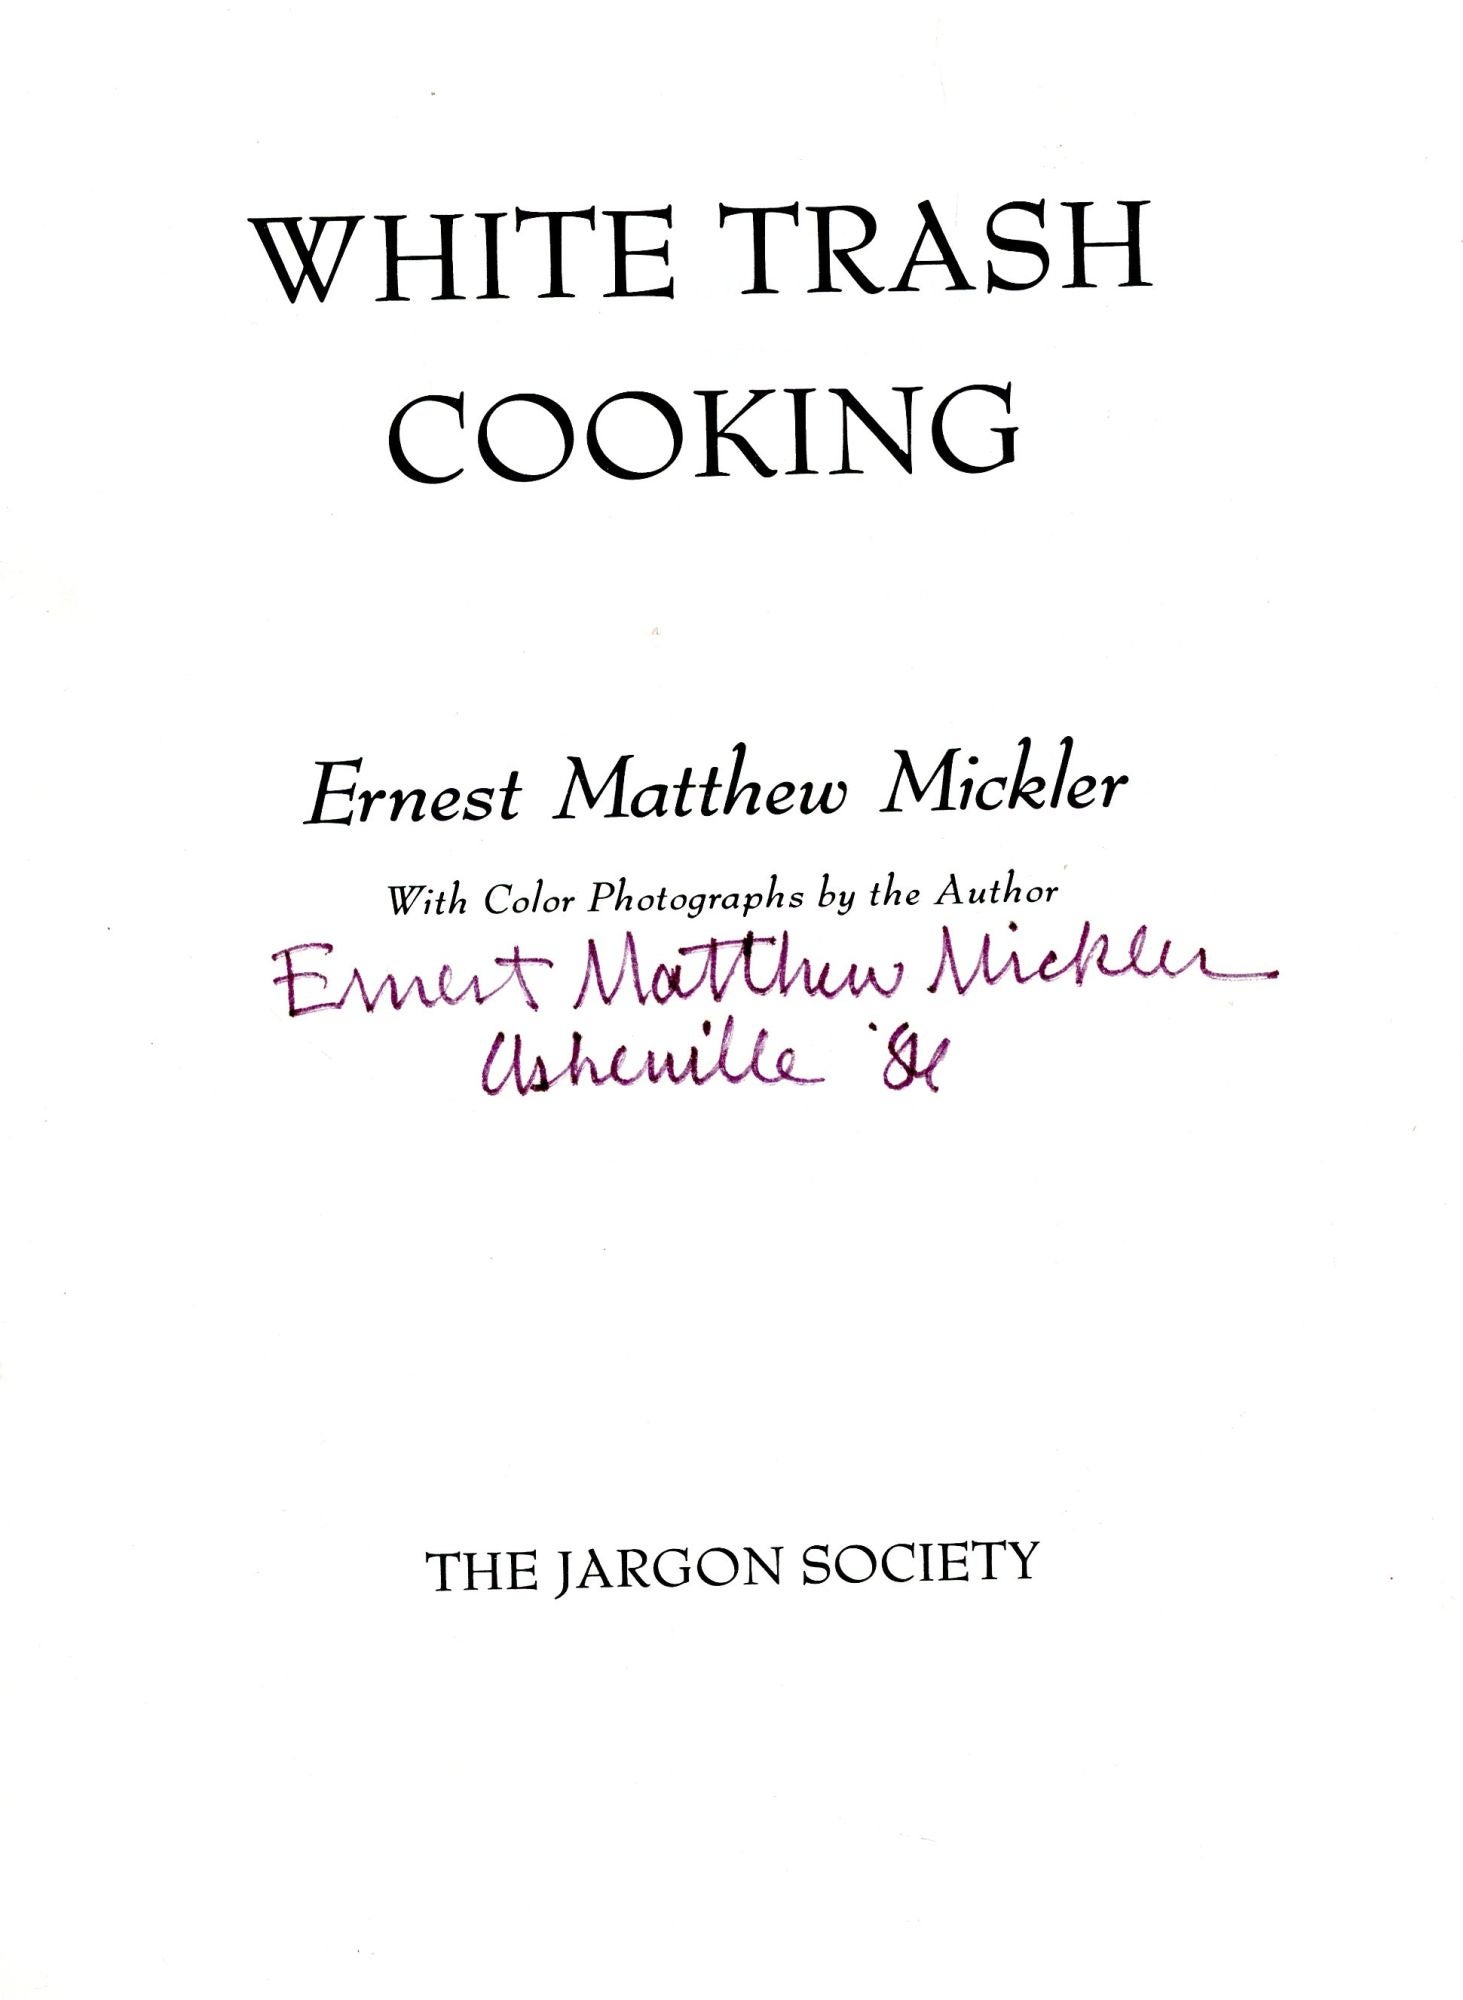 WHITE TRASH COOKING By Ernest Matthew Mickler